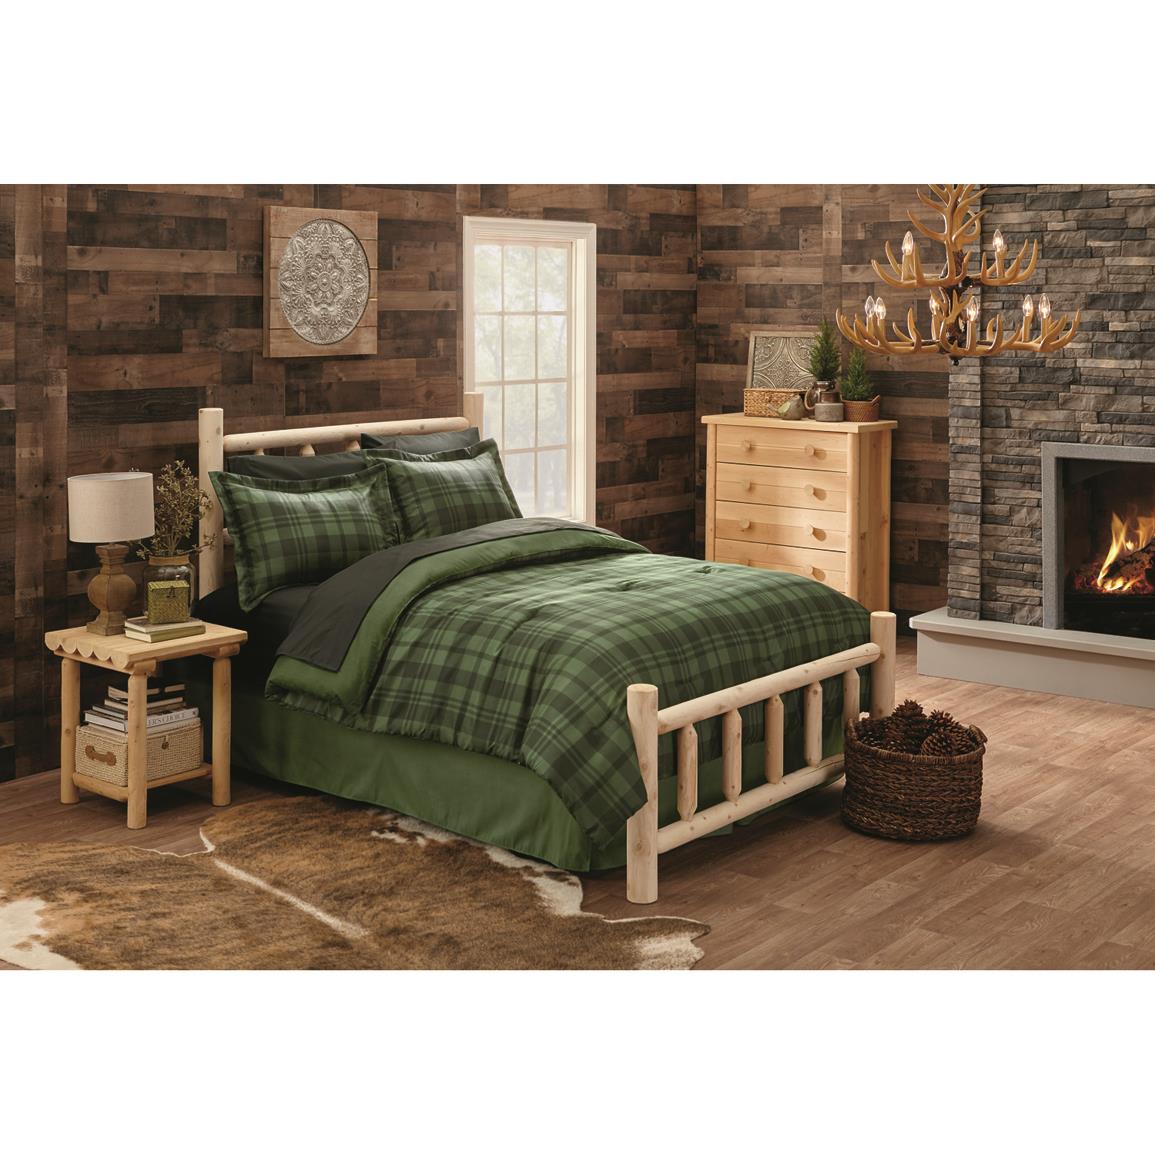 CASTLECREEK North American Cedar Log Bed, King